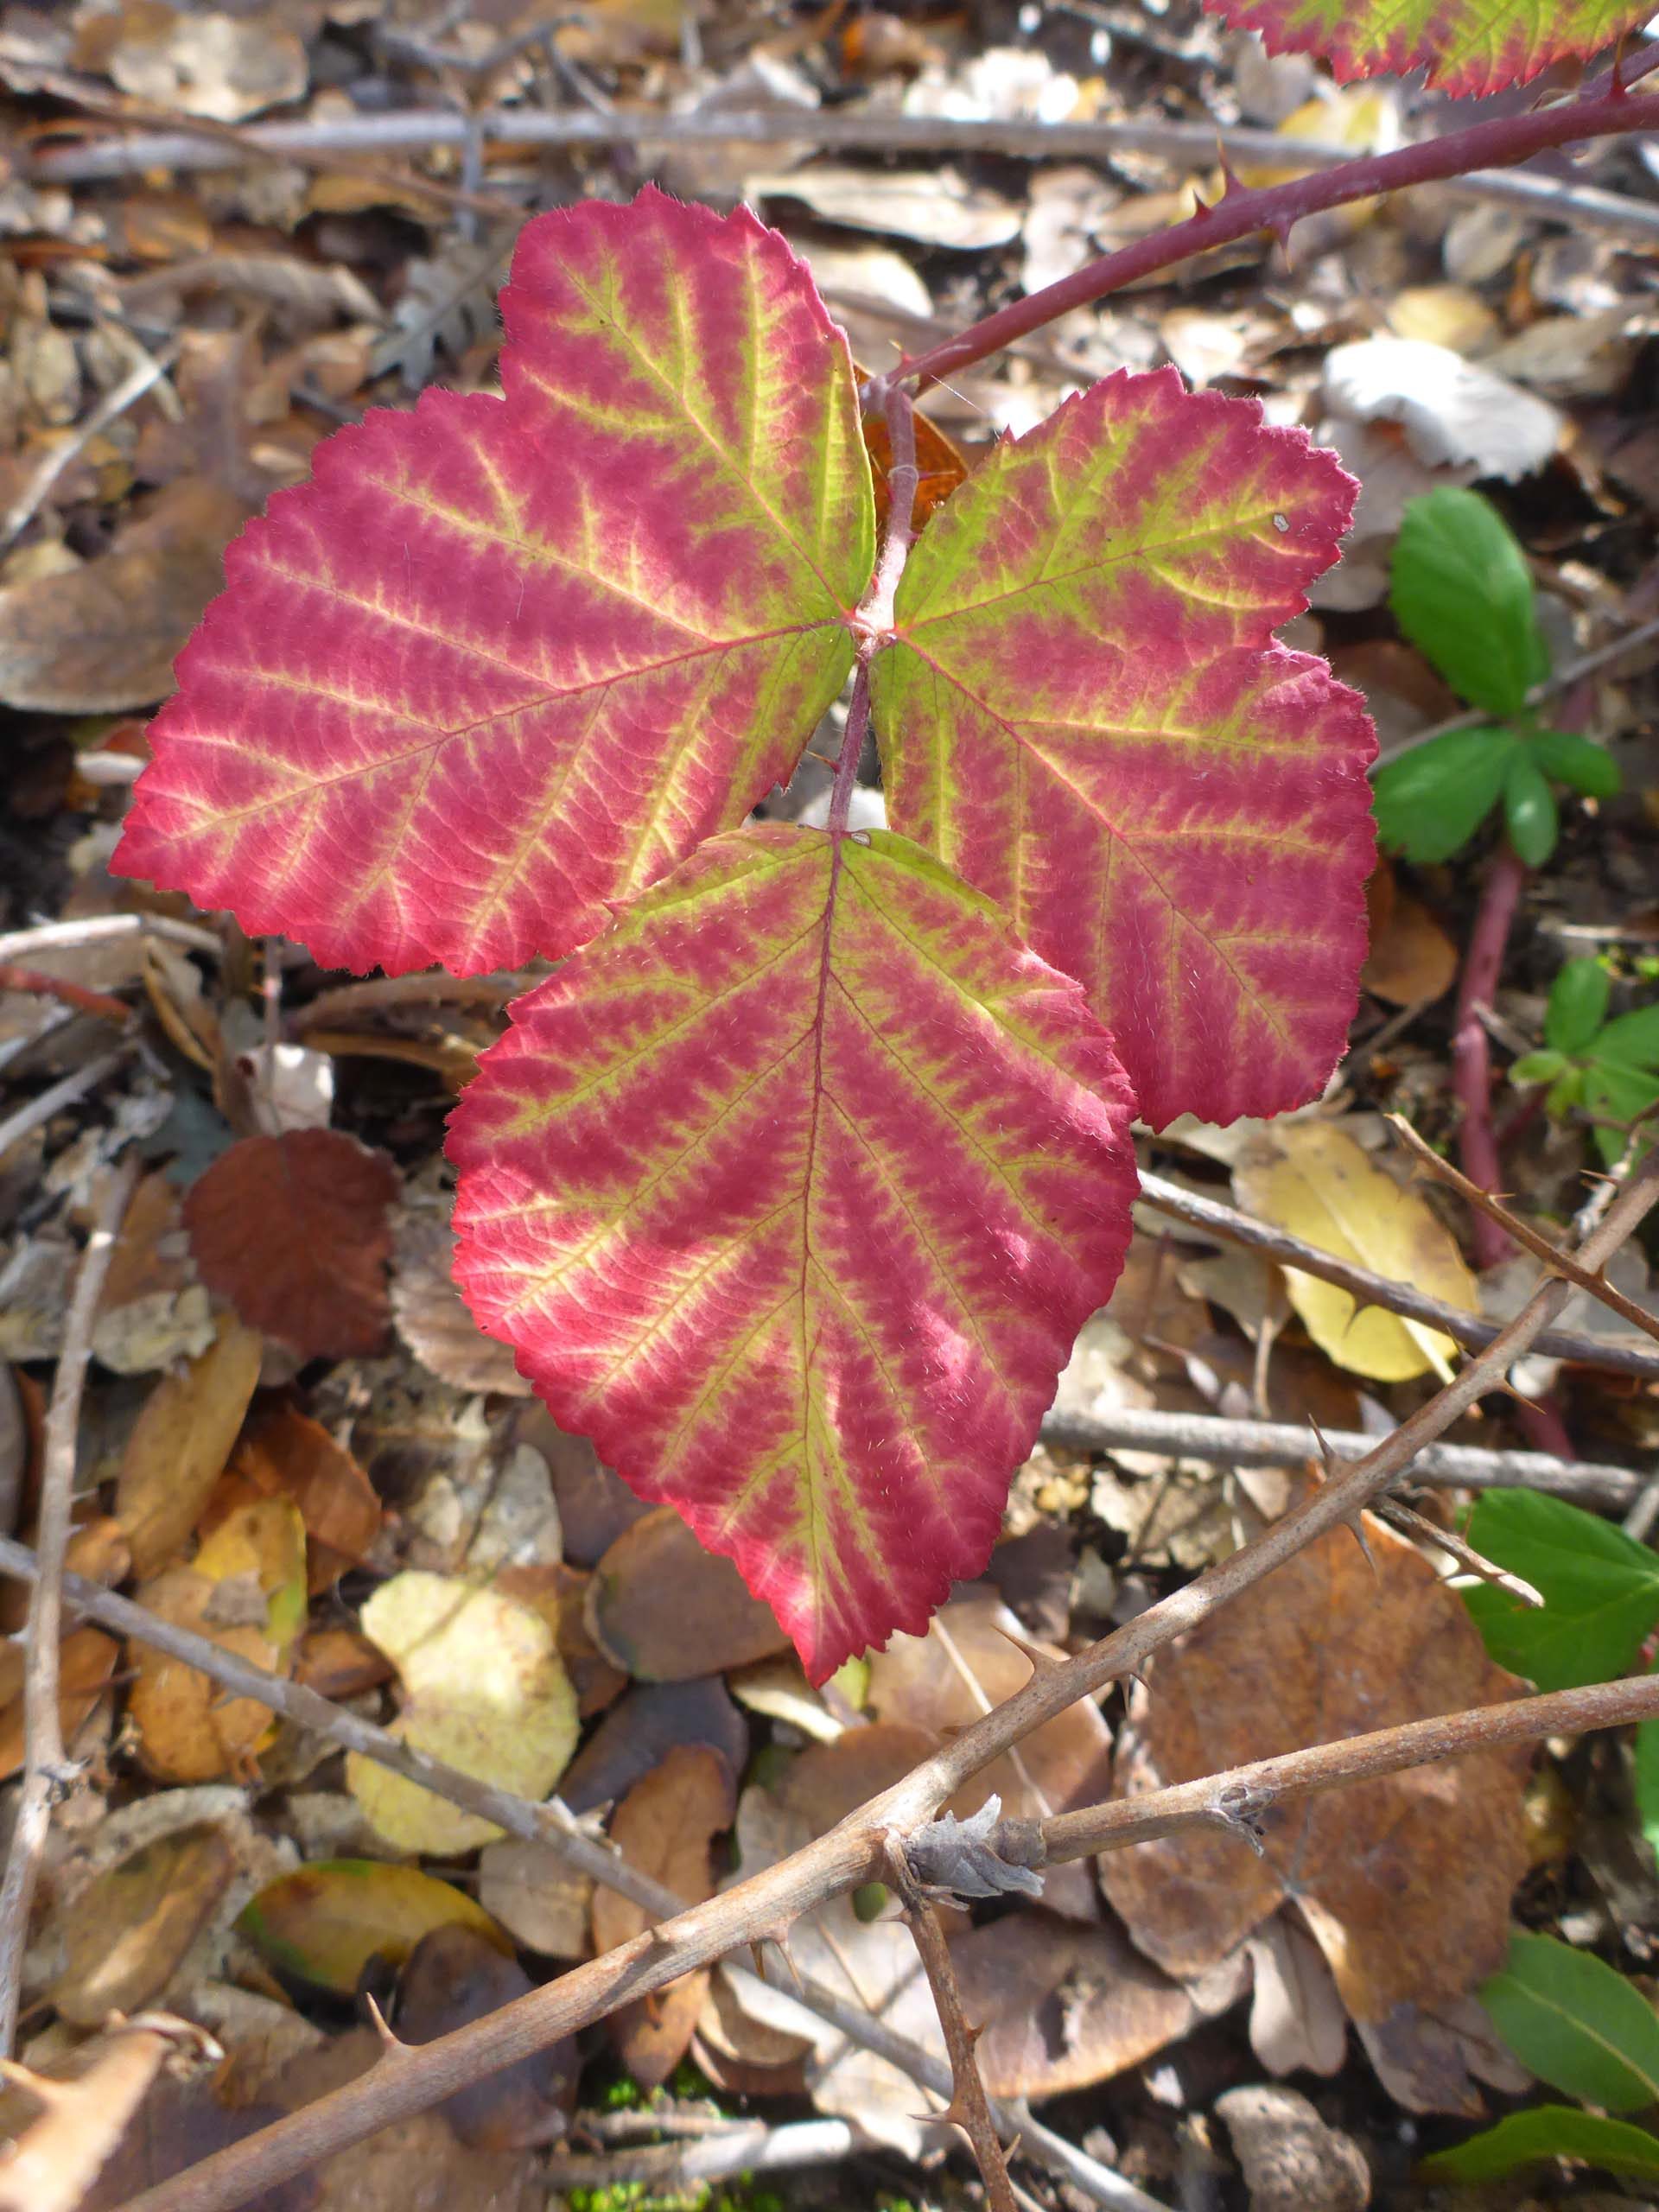 Himalayan blackberry leaf. D. Burk.